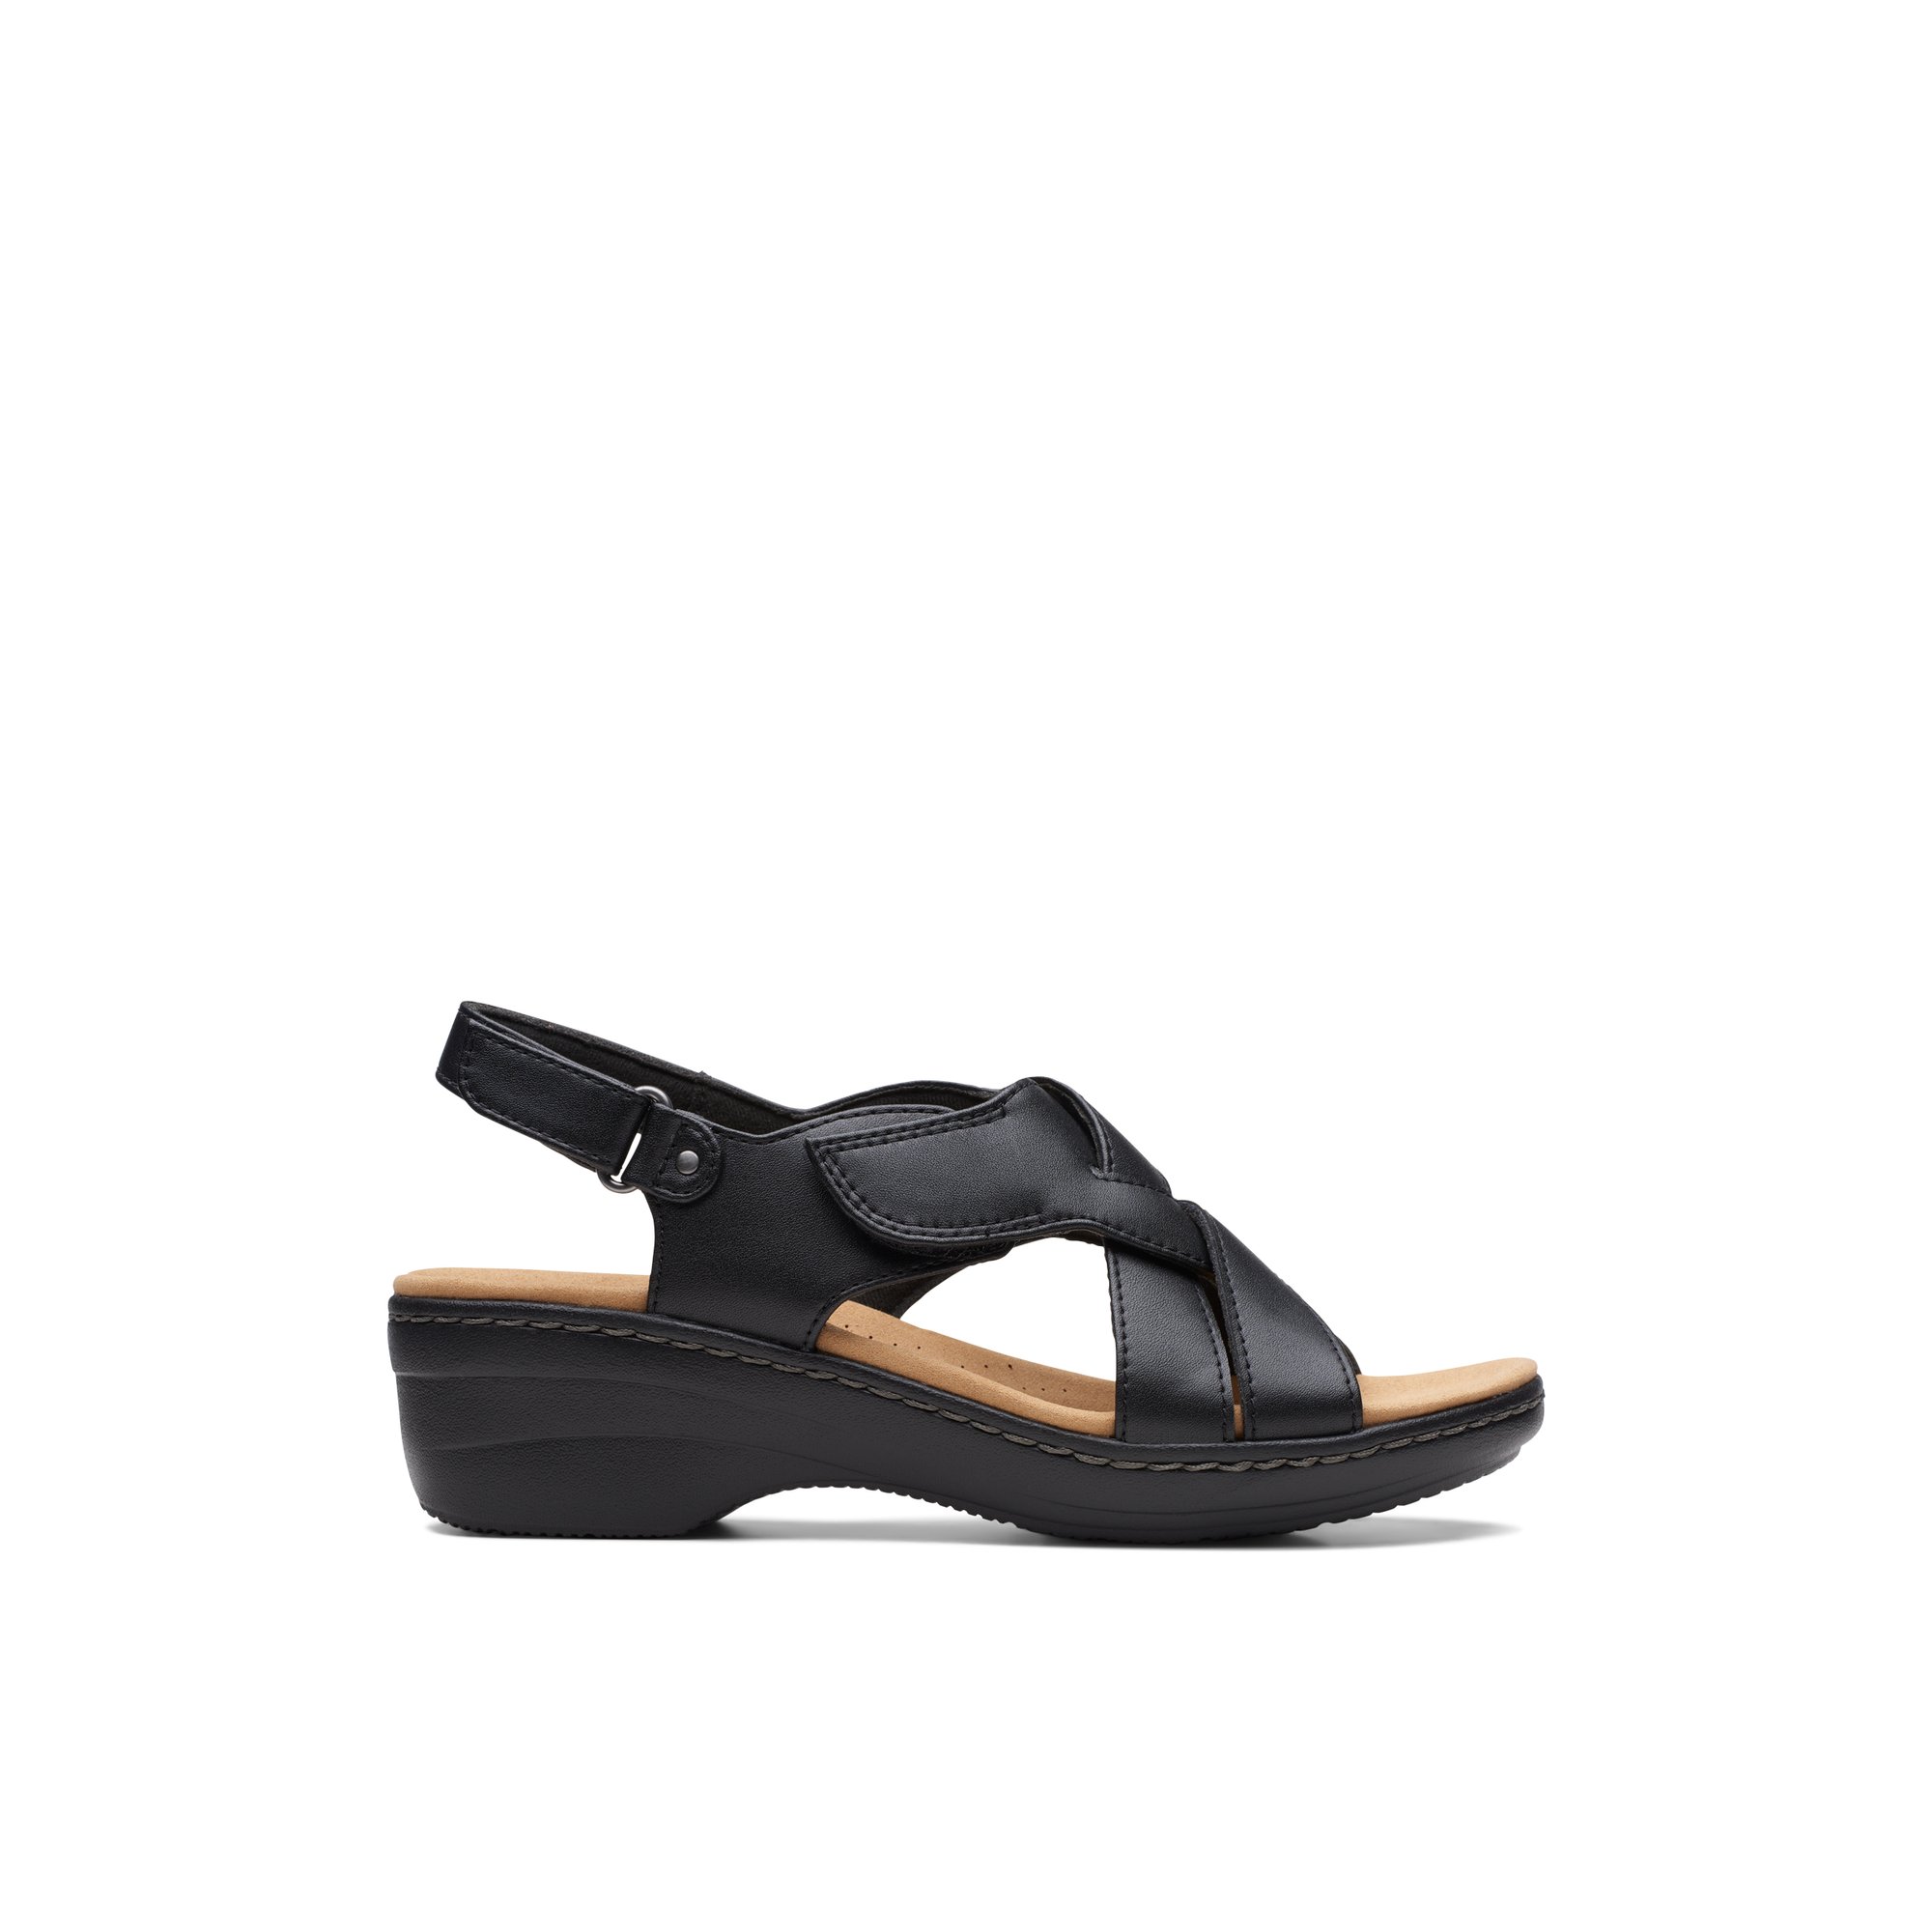 Clarks Merliah b-w - Women's Footwear Sandals Wedges Black